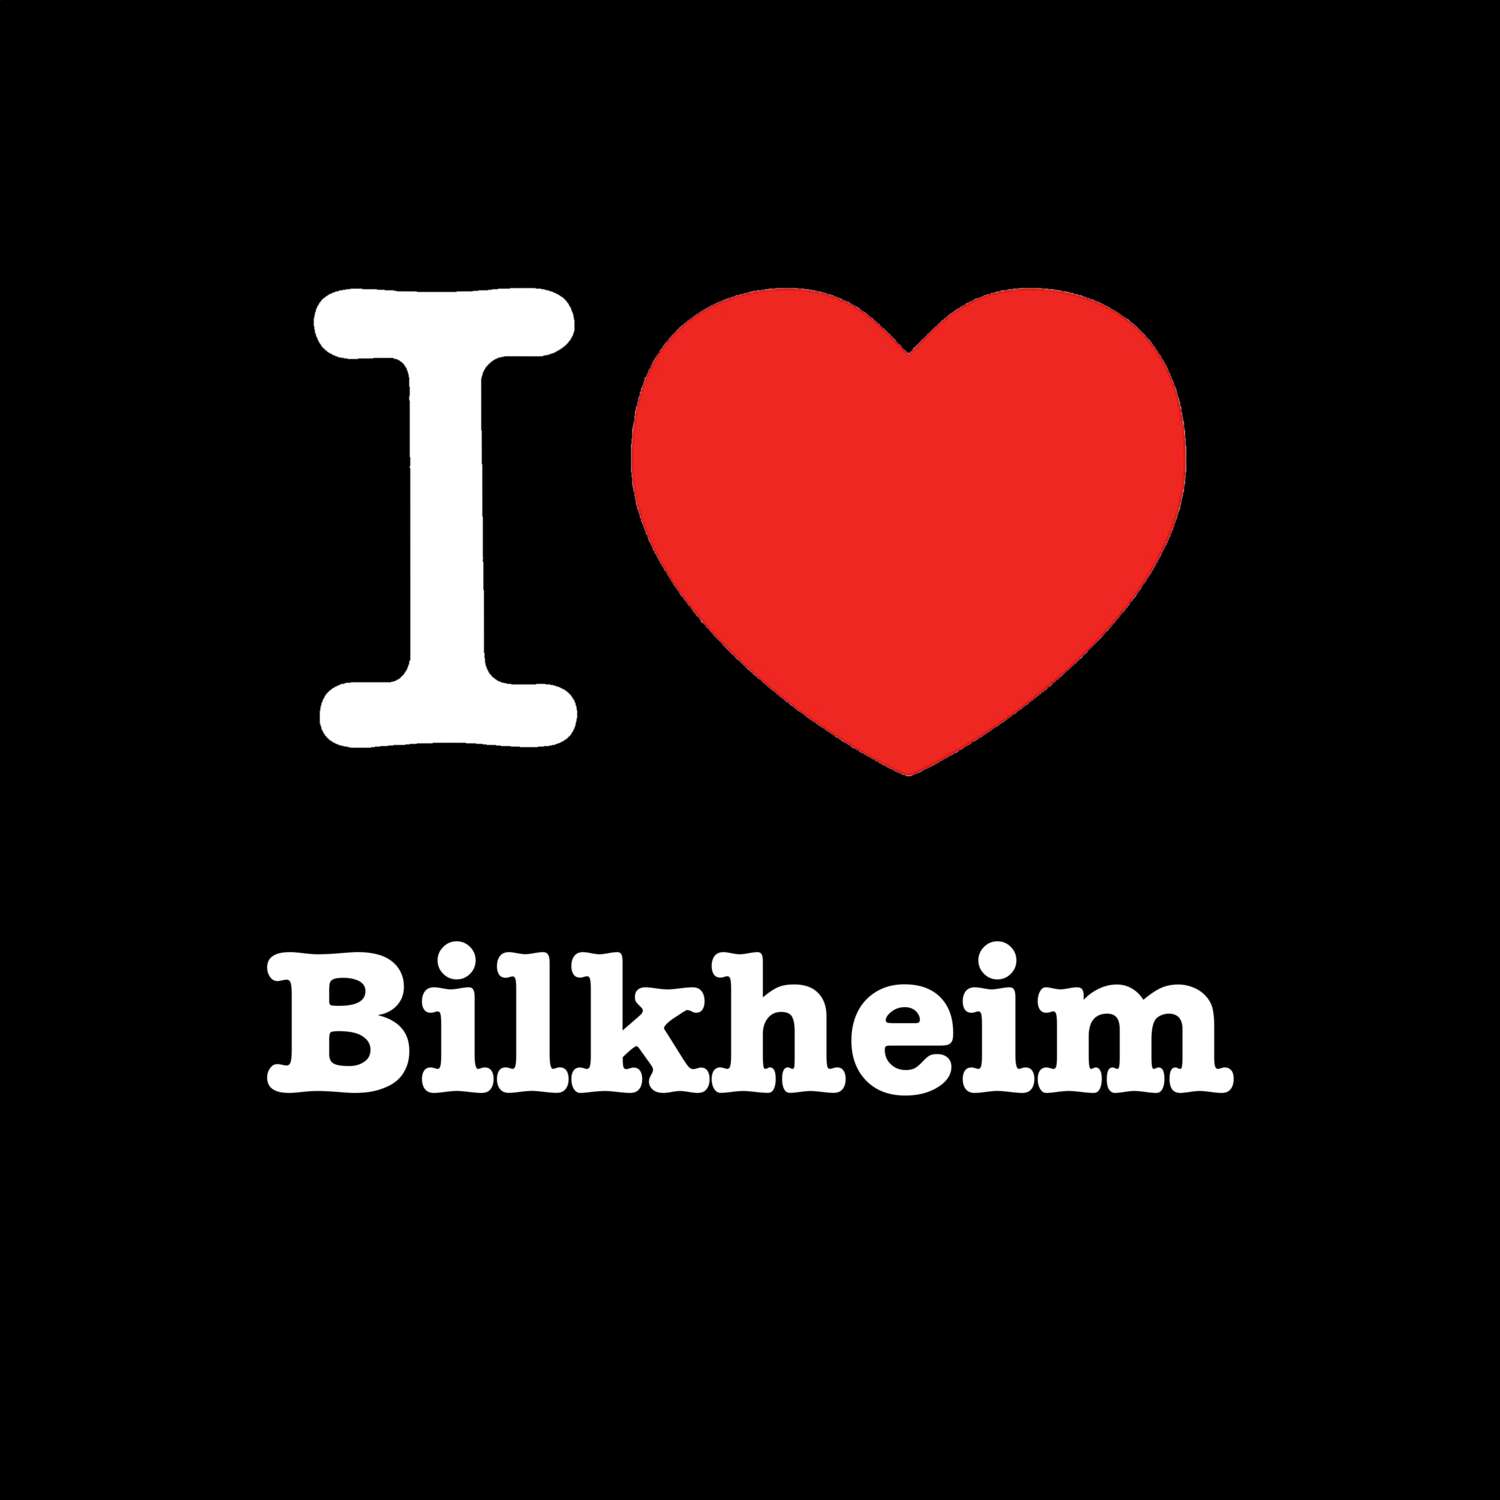 Bilkheim T-Shirt »I love«